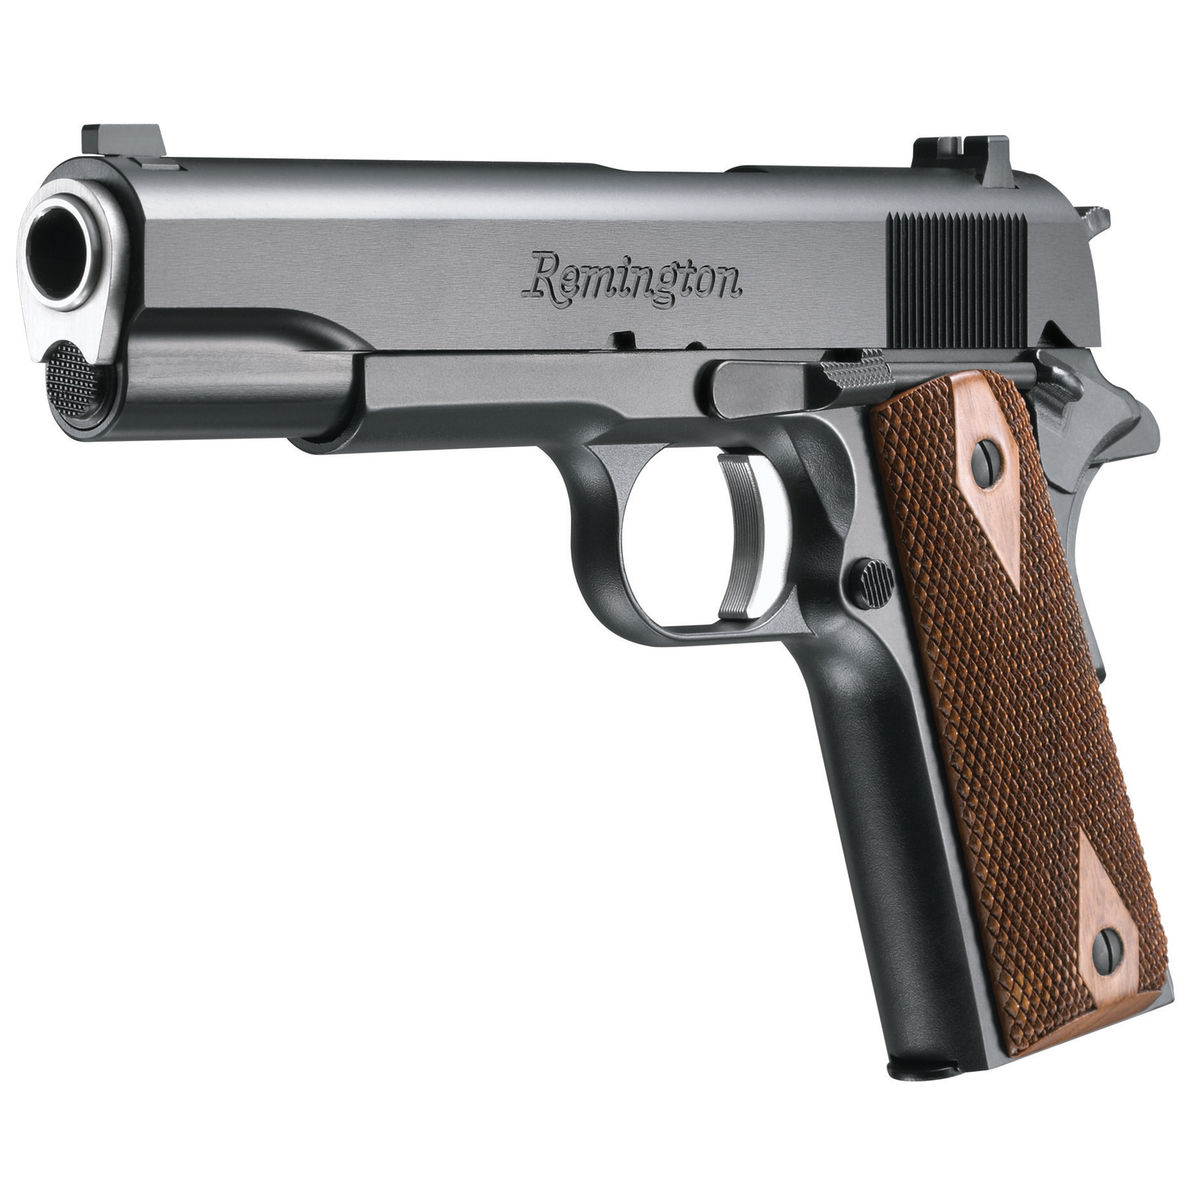 Remington Pistol #30